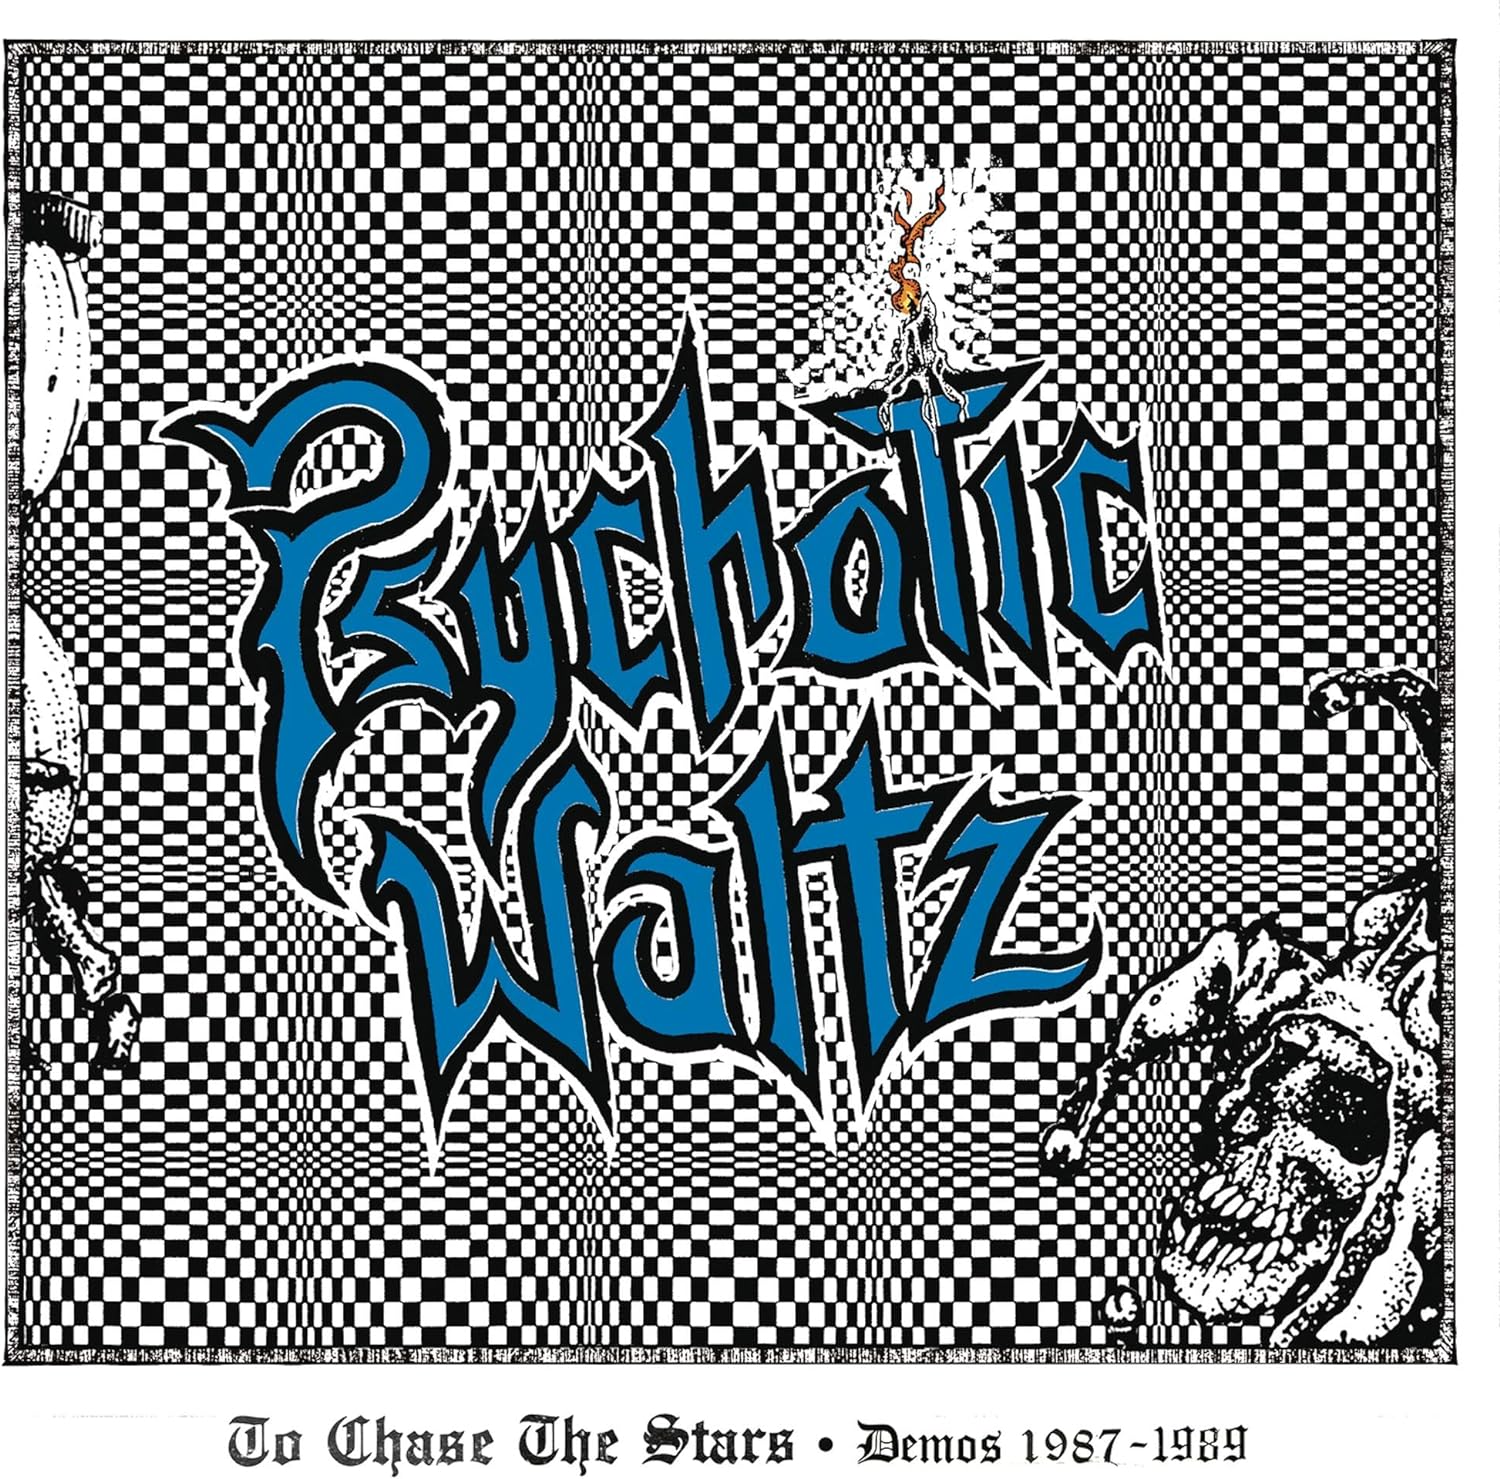 Psychotic Waltz "To Chase The Stars (Demos 1987-1989)" 2x12" Vinyl - PRE-ORDER